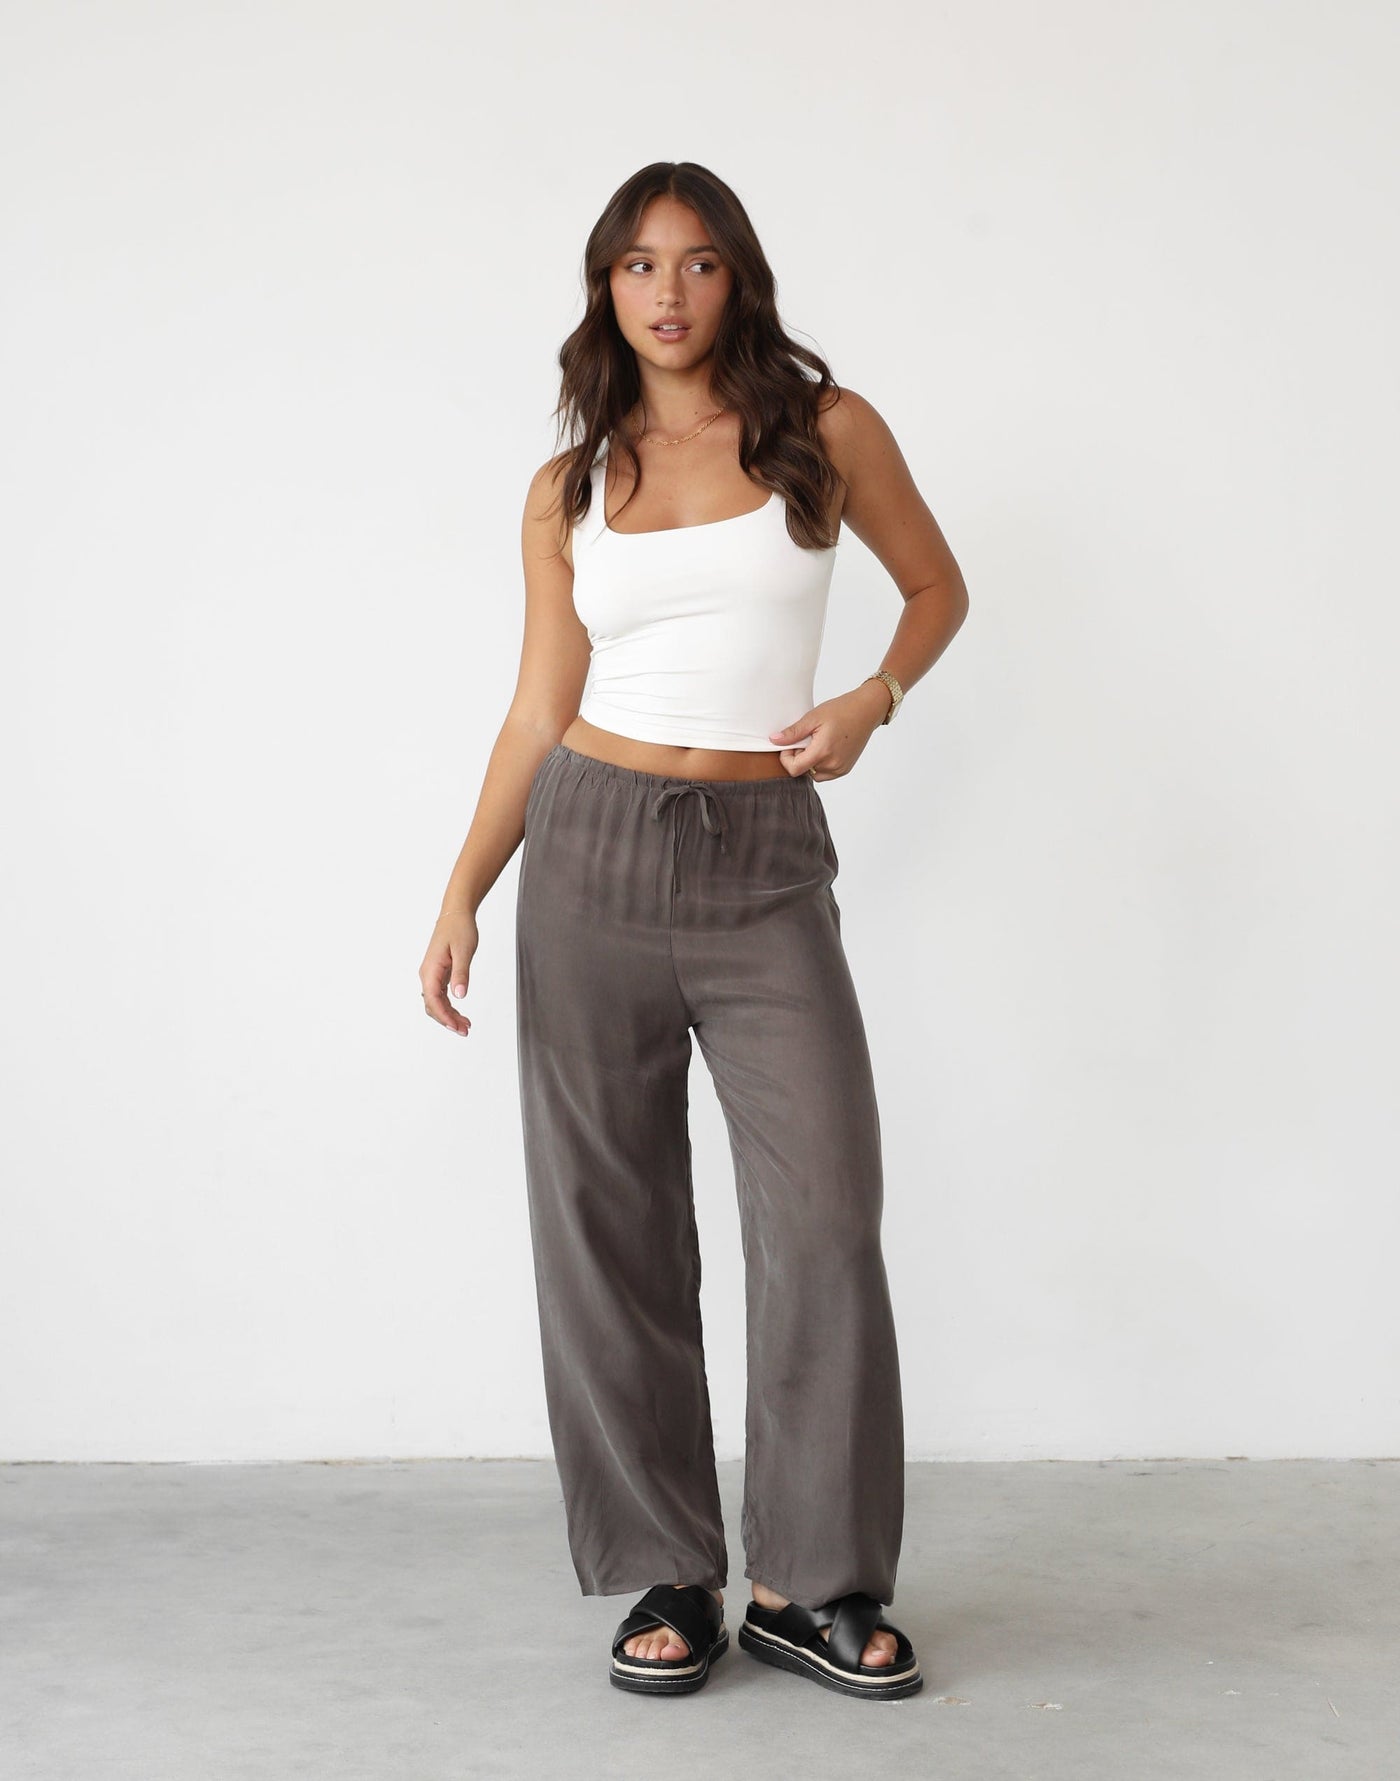 Elska Pants (Warm Grey) | Adjustable Flowy Pants - Women's Pants - Charcoal Clothing